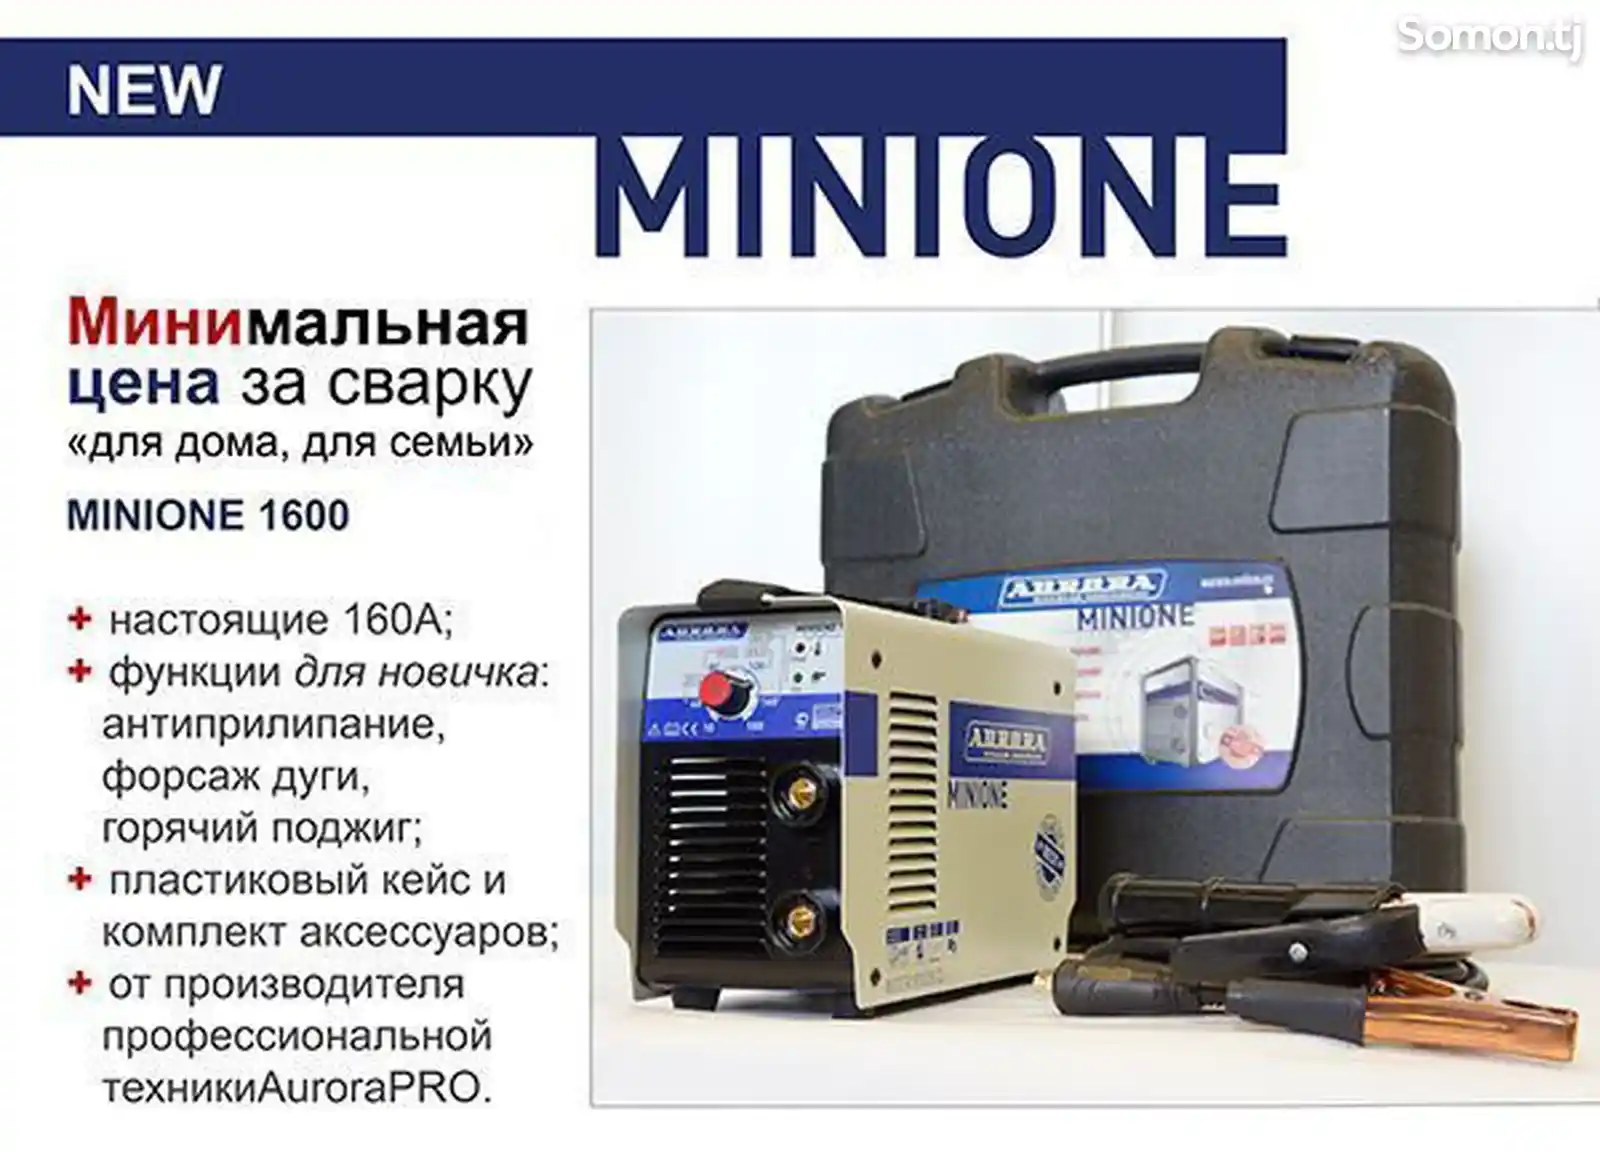 Сварочный аппарат инверторного типа Aurora Minione1600 Case, Mma-6